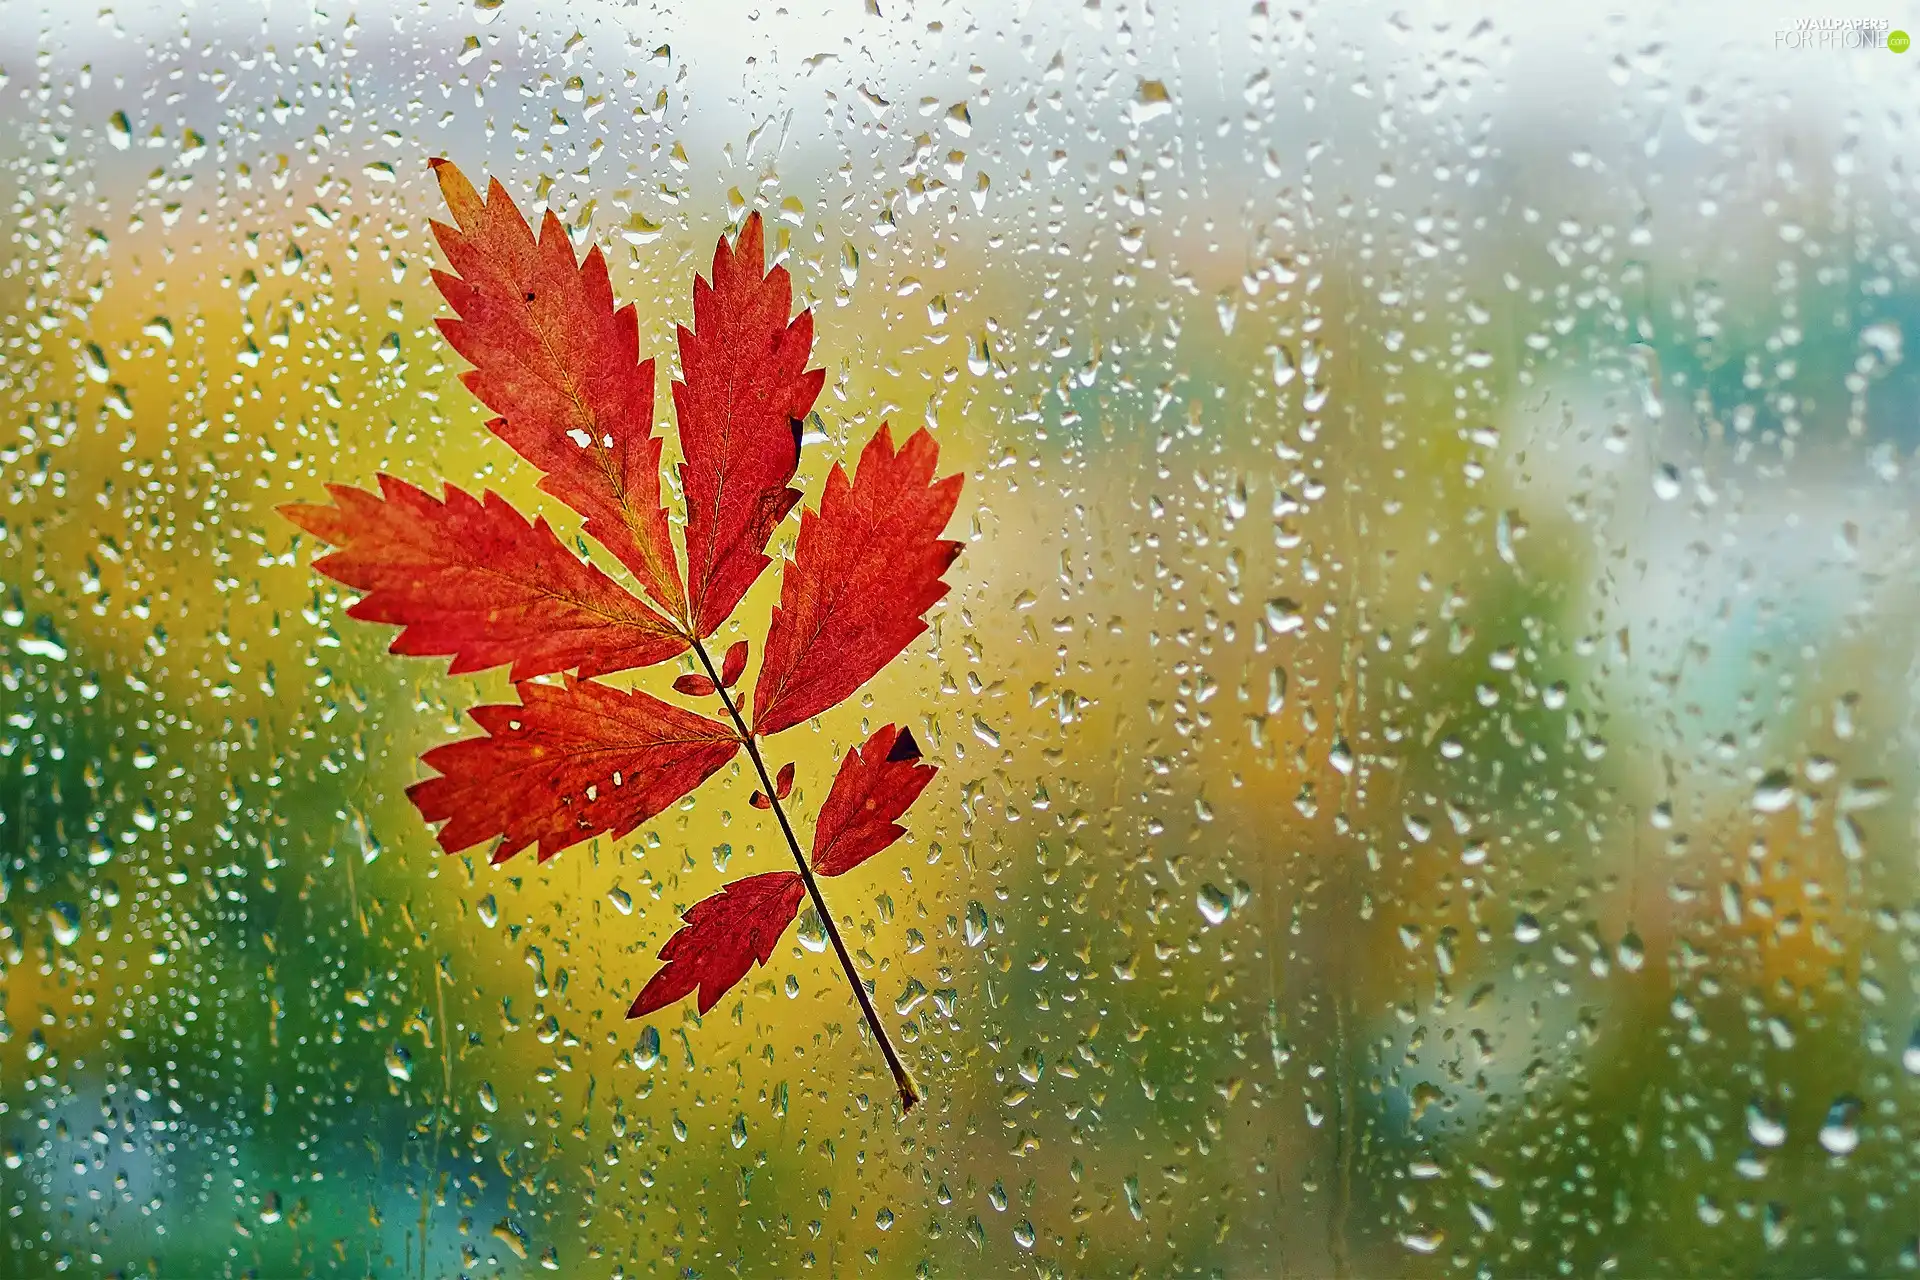 Glass, Autumn, leaf, Rain